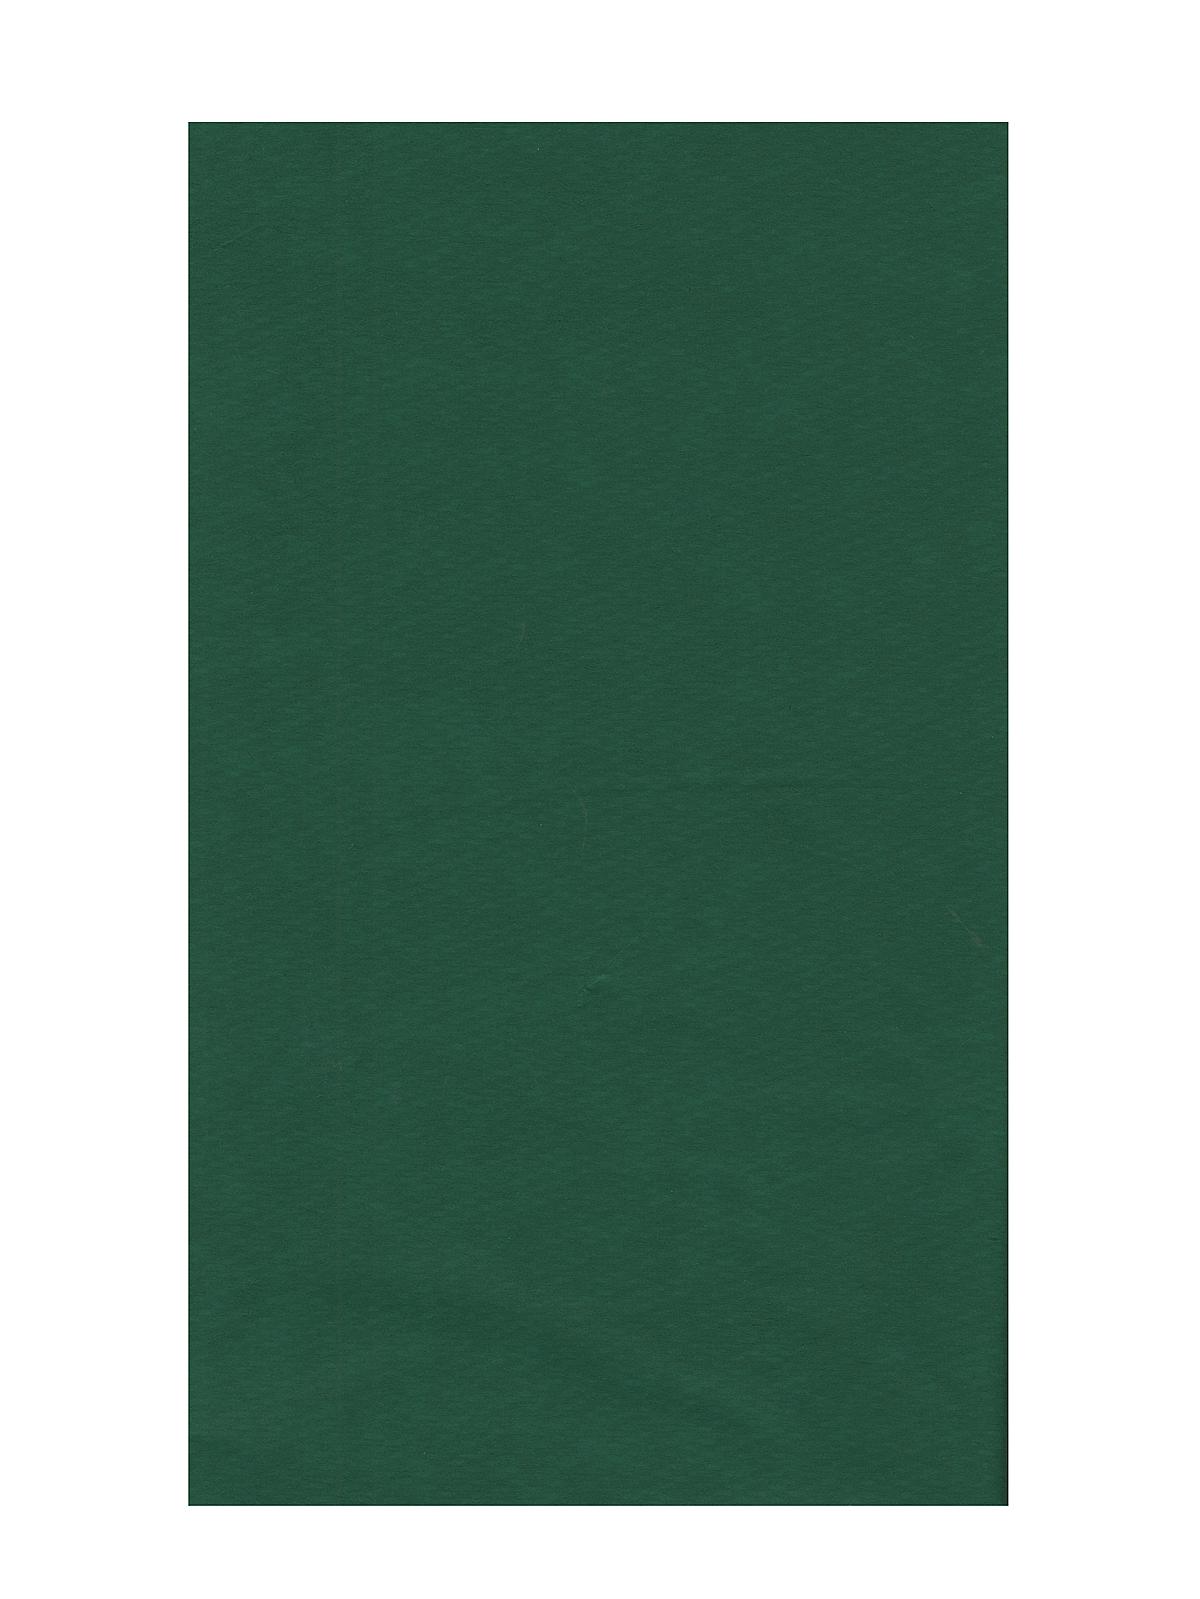 Spectra Deluxe Bleeding Art Tissue Emerald Green 20 In. X 30 In. Pack Of 24